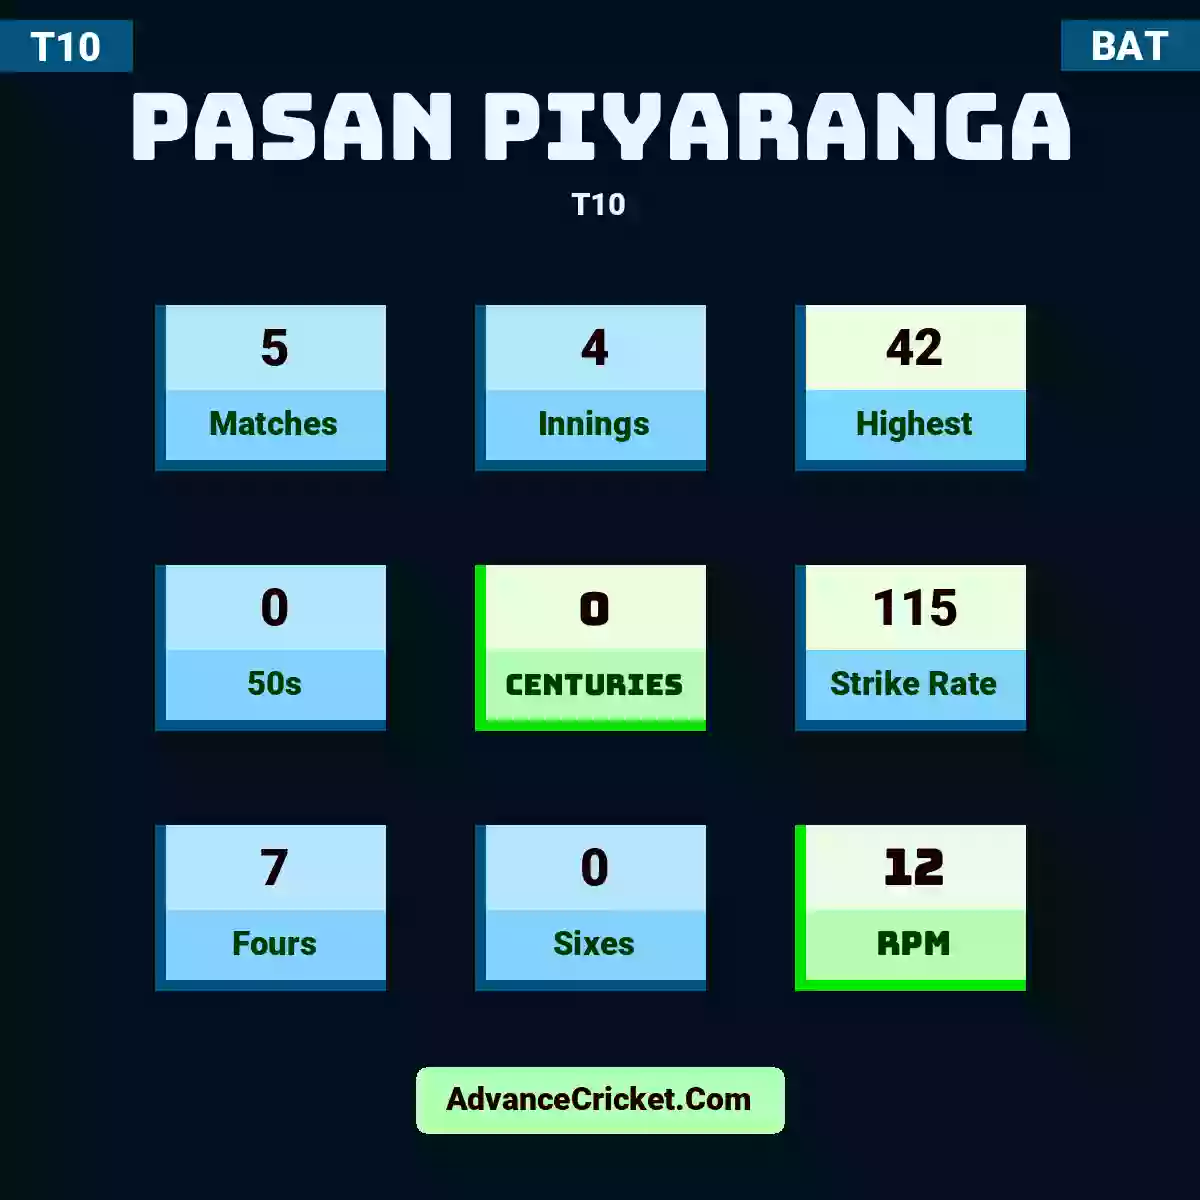 Pasan Piyaranga T10 , Pasan Piyaranga played 5 matches, scored 42 runs as highest, 0 half-centuries, and 0 centuries, with a strike rate of 115. P.Piyaranga hit 7 fours and 0 sixes, with an RPM of 12.